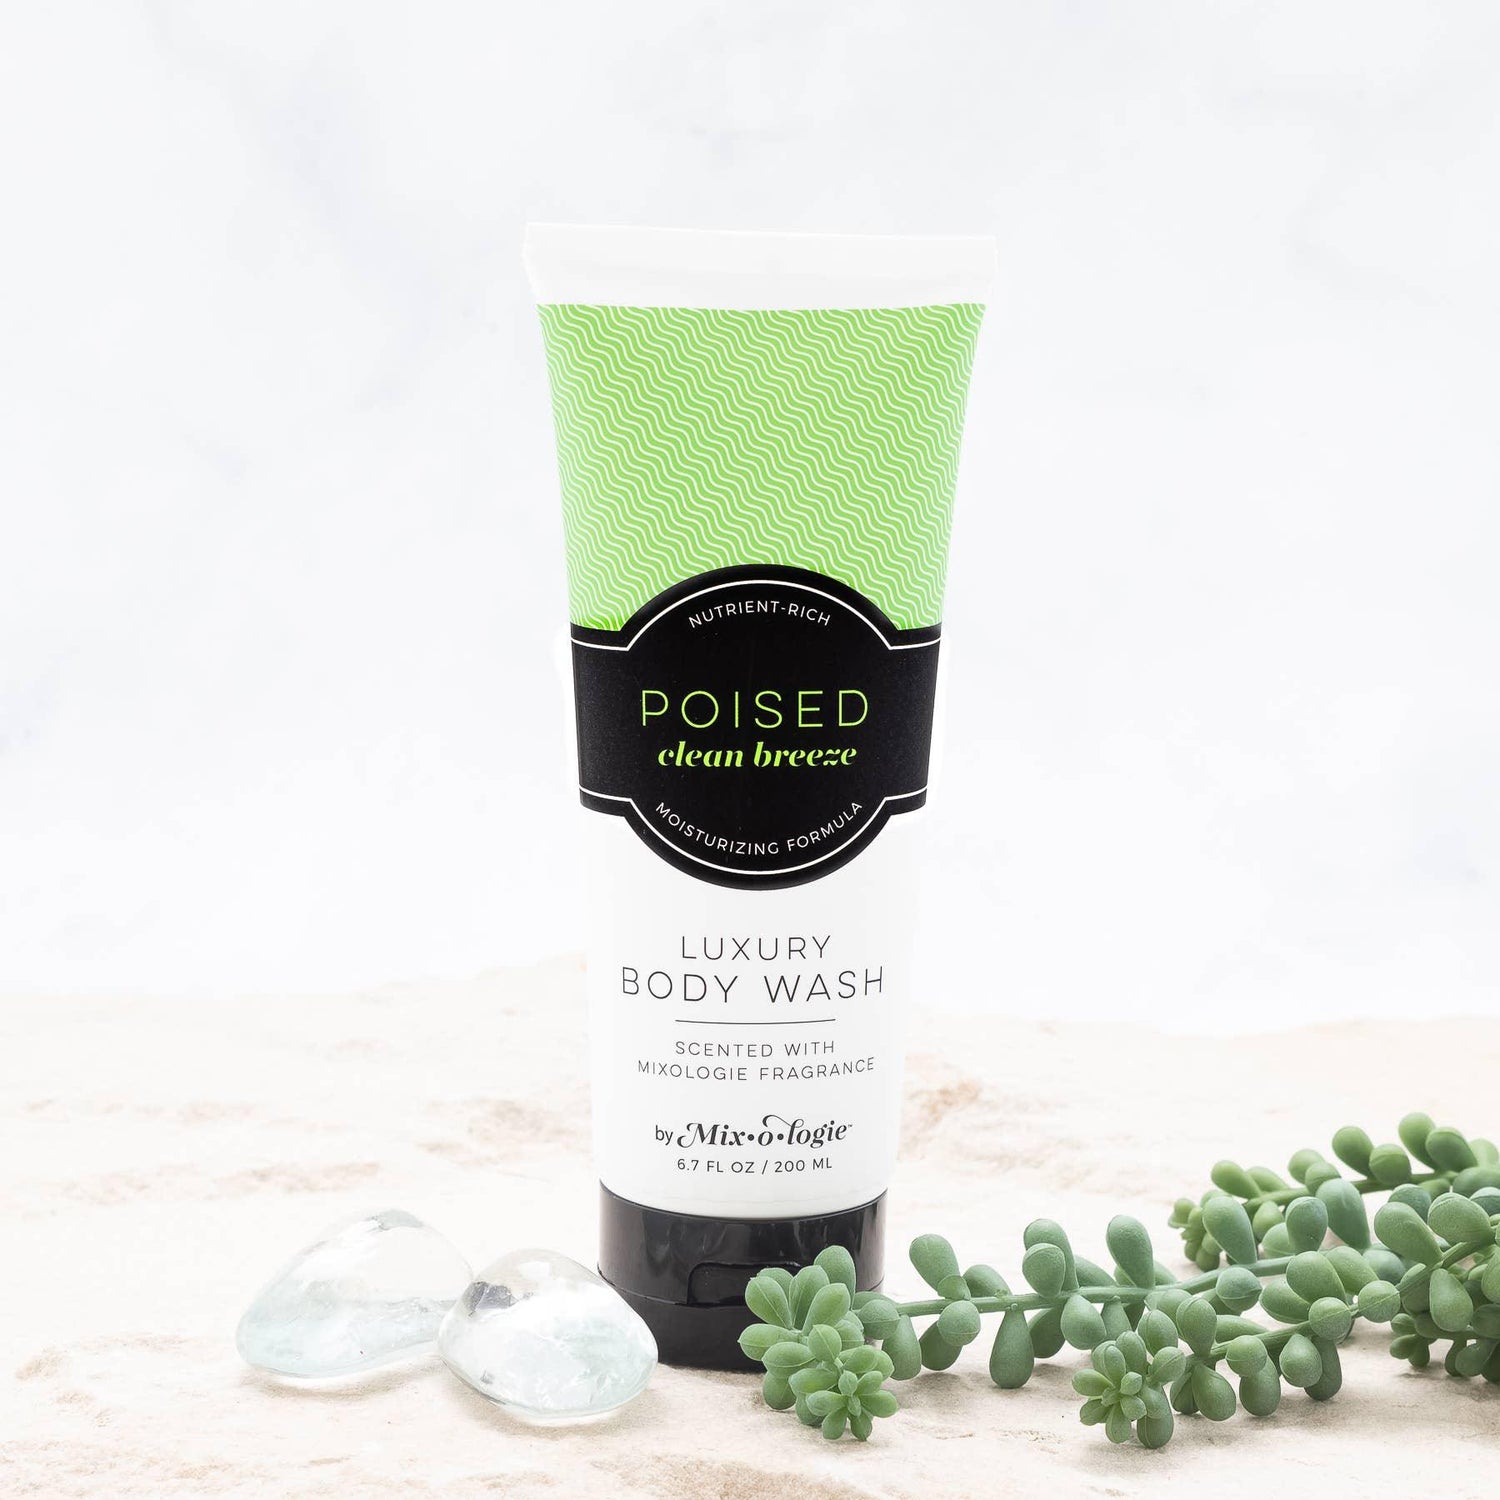 Luxury Body Wash / Shower Gel - Poised (clean breeze) scent 2